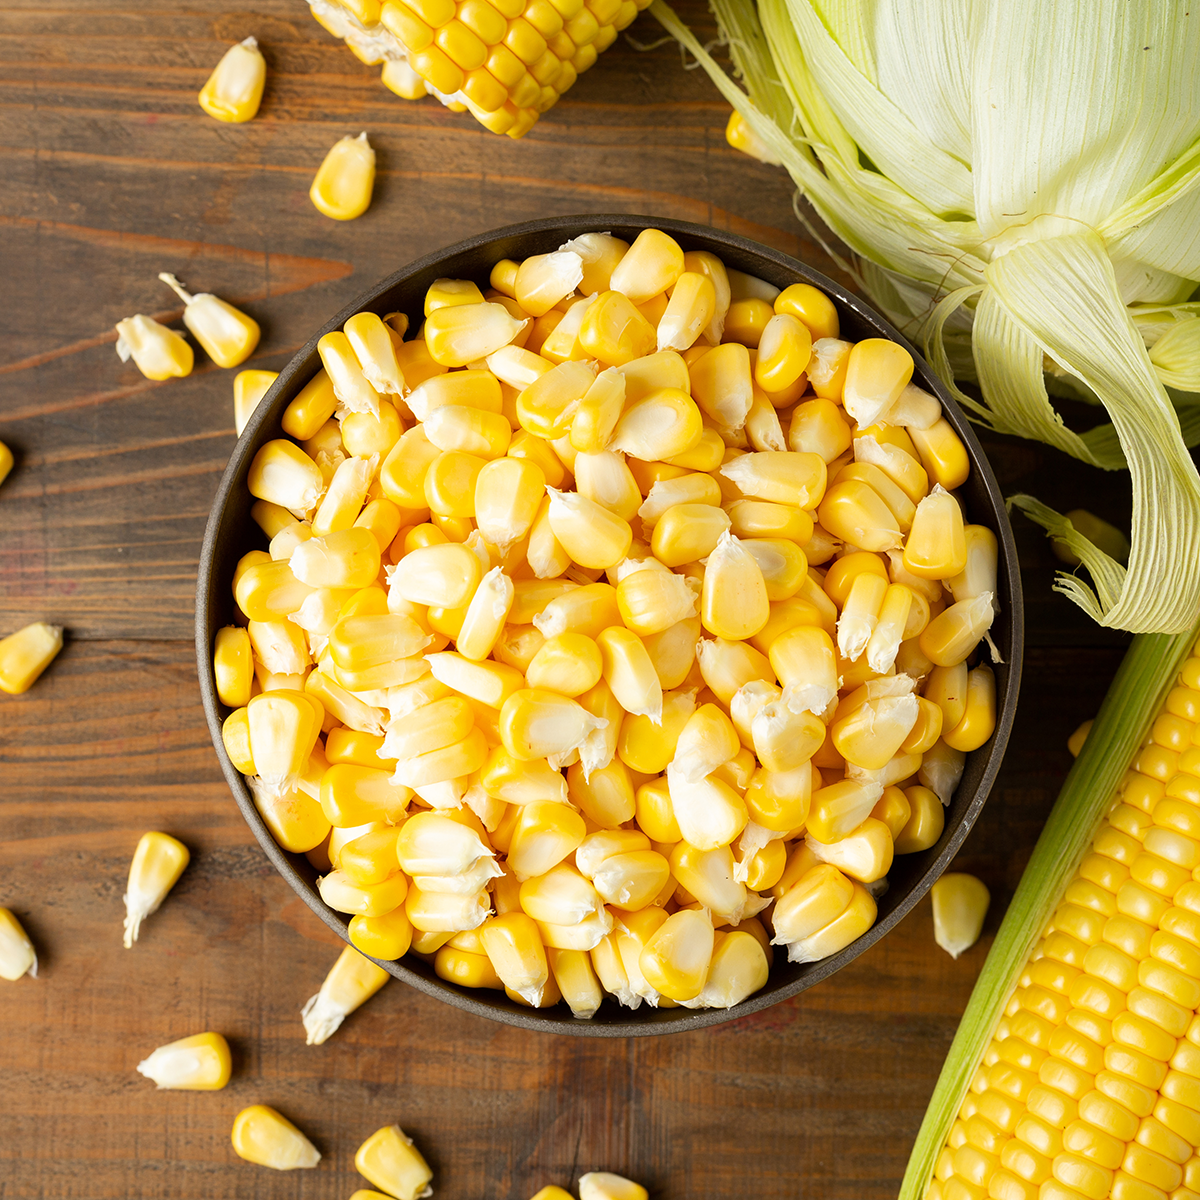 Snac Atac introduces Cornado, a new age corn-based crunchy snack